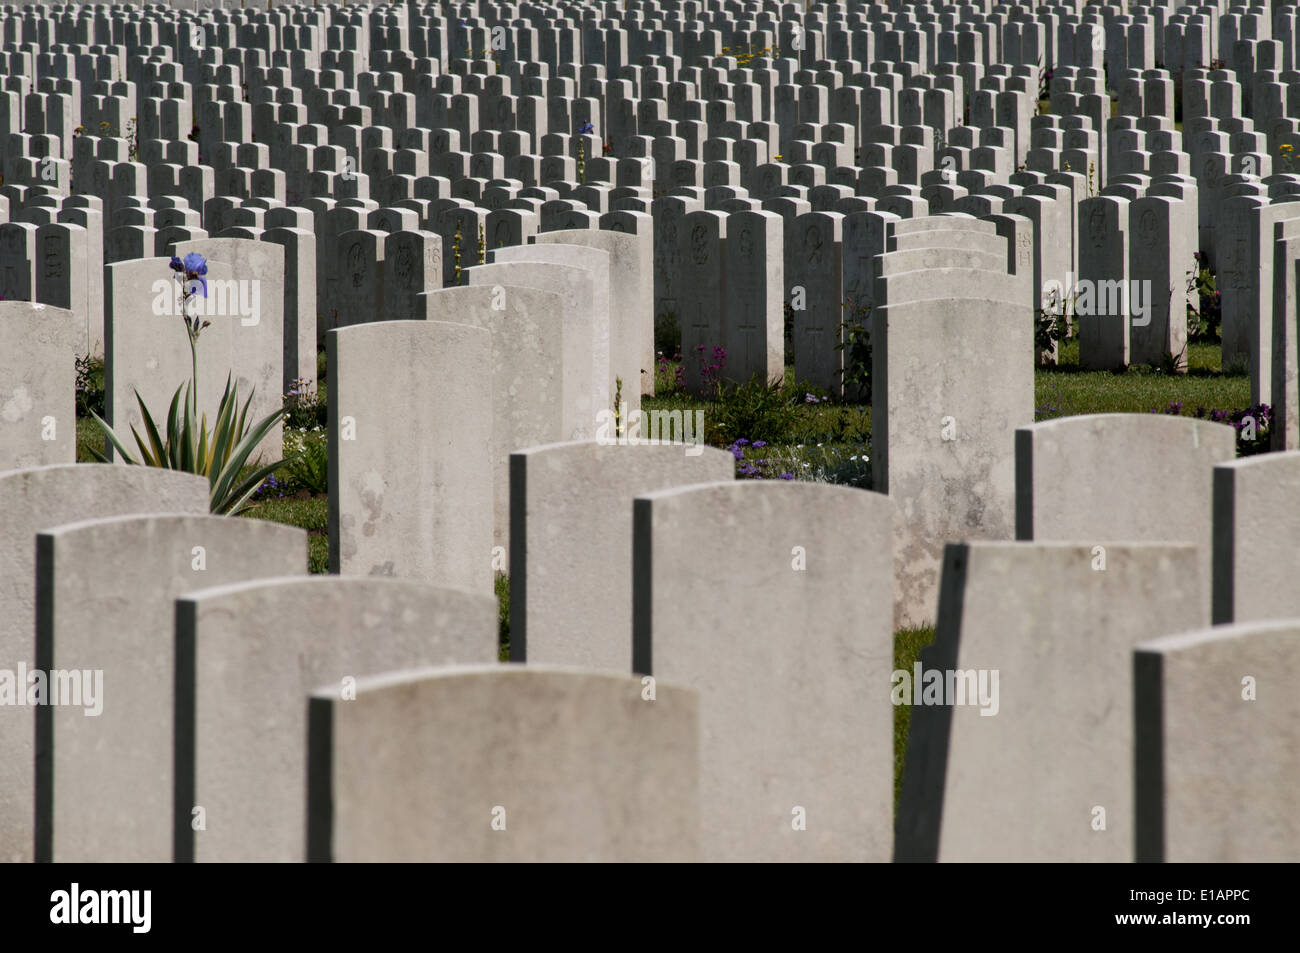 Massed ranks of headstones in Etaples Military Cemetery, largest ...